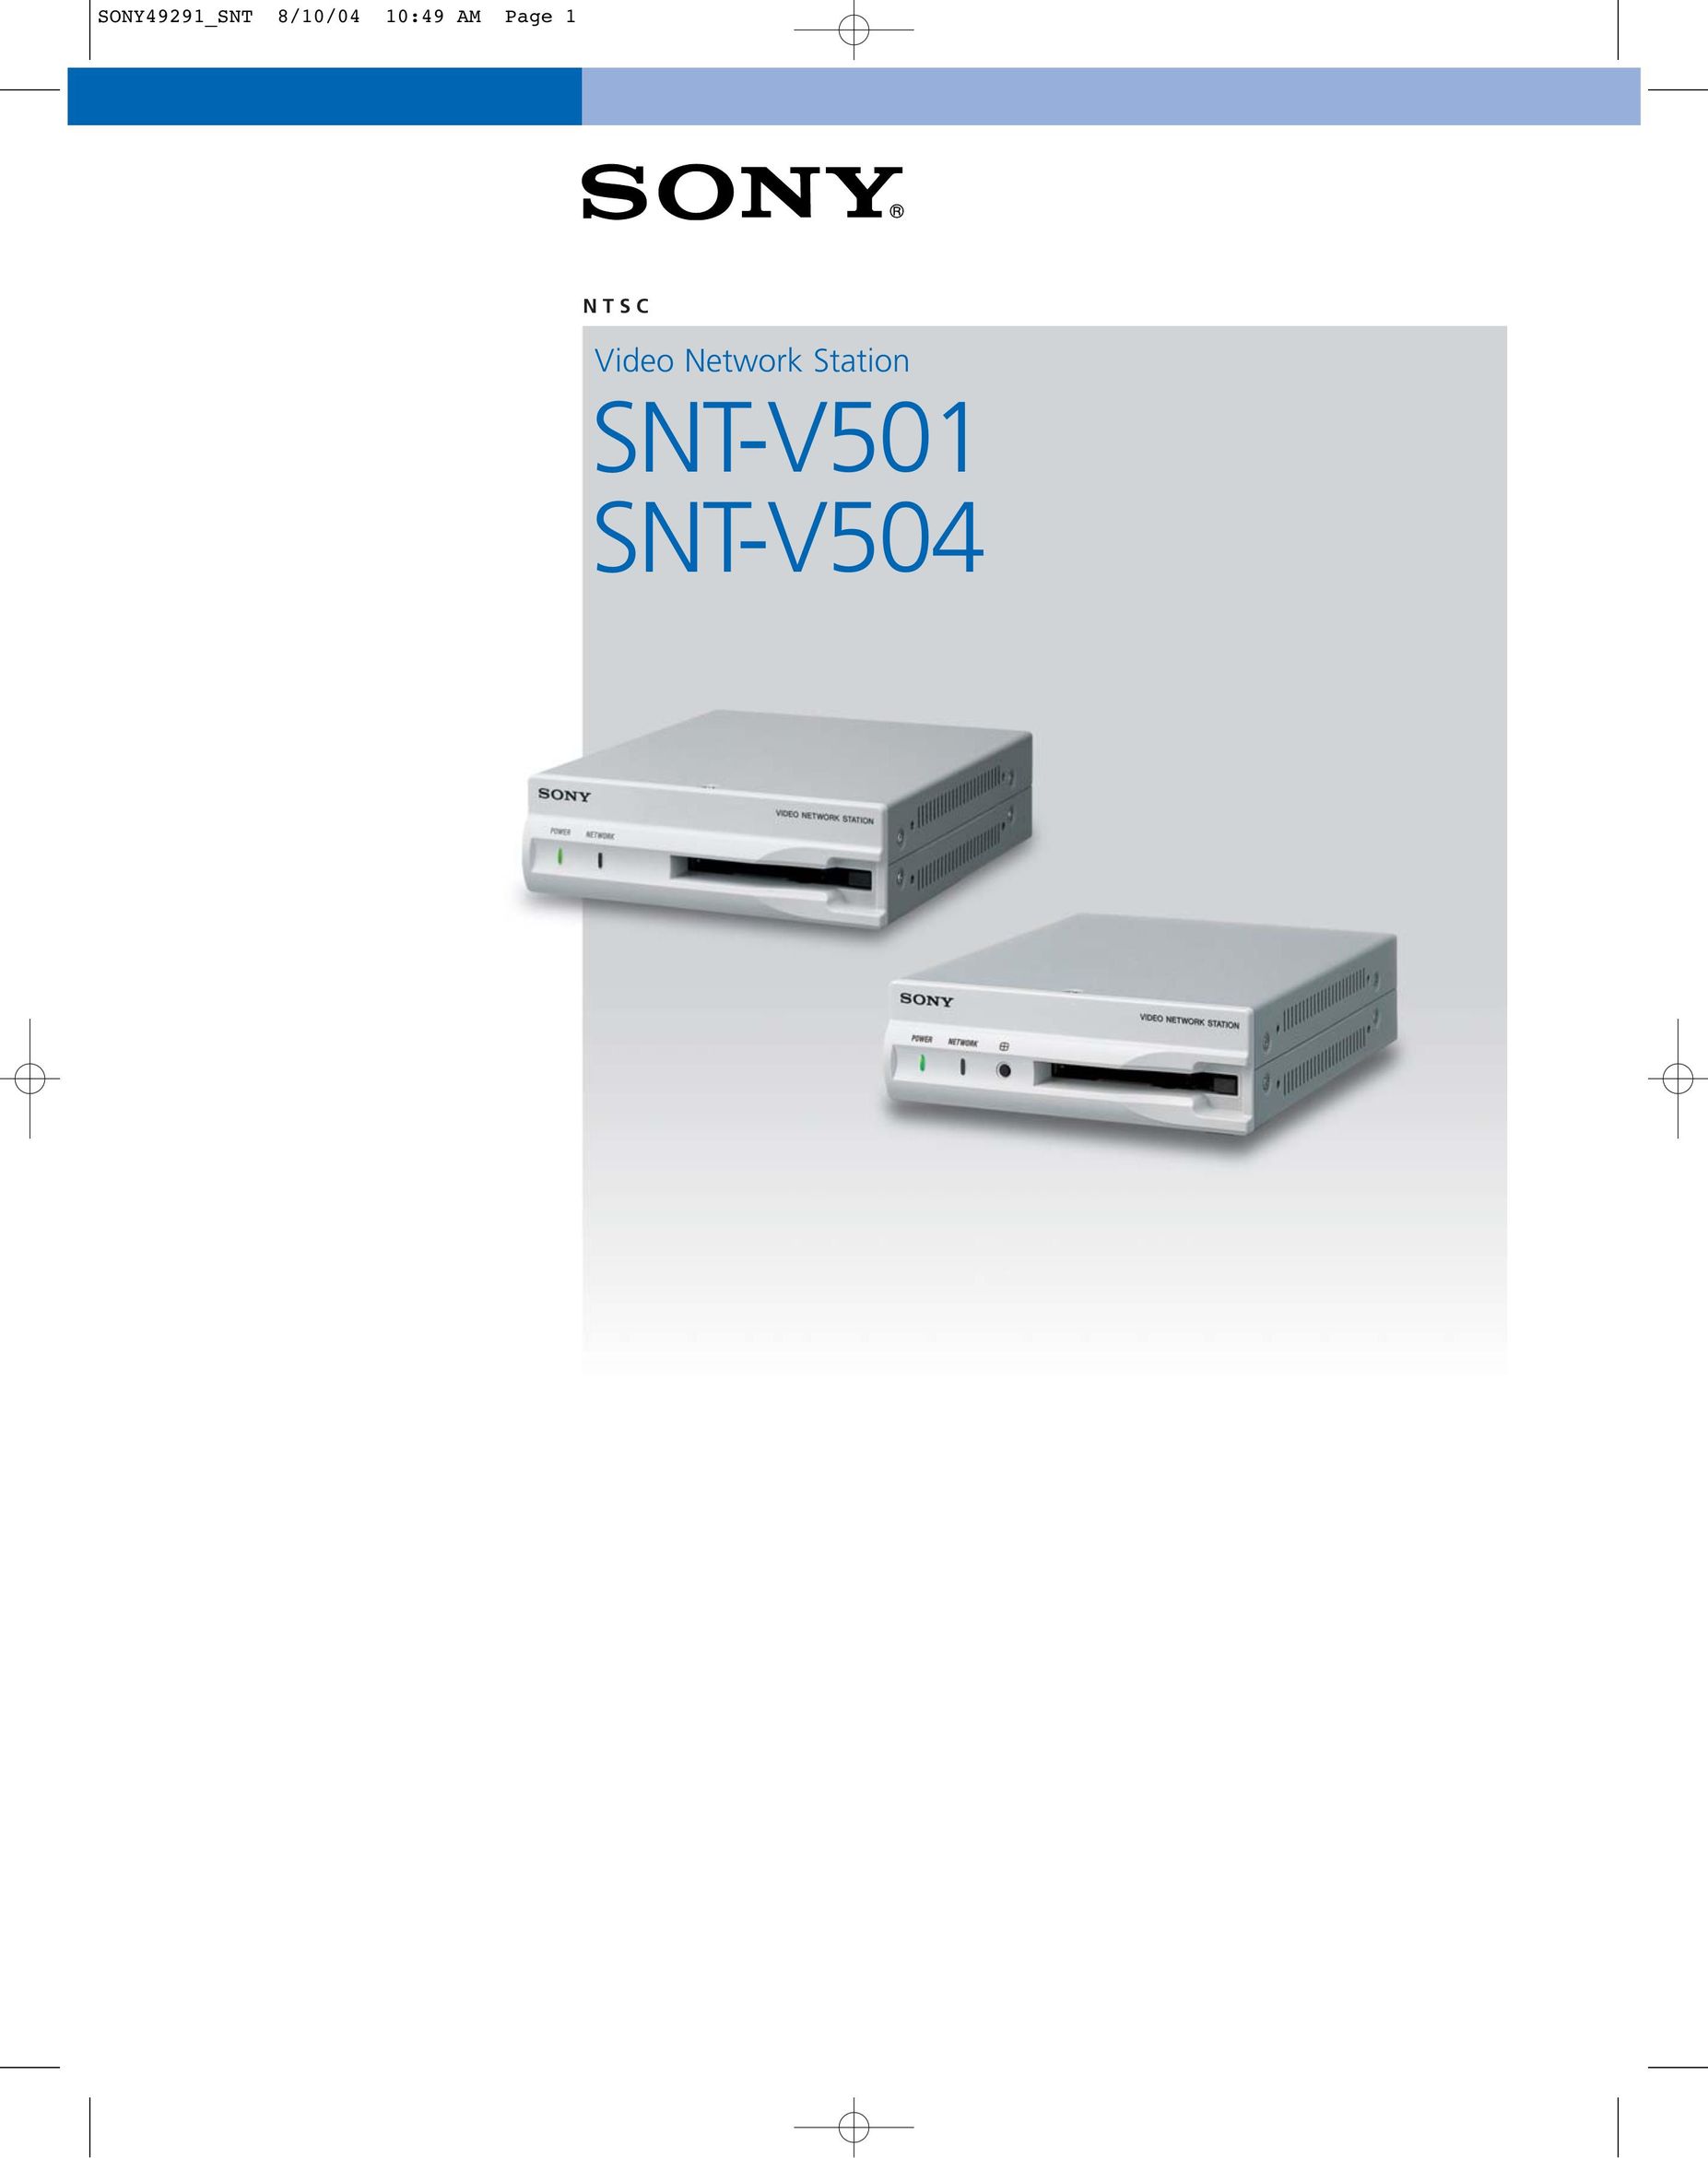 Nikon SNT-V504 Network Card User Manual